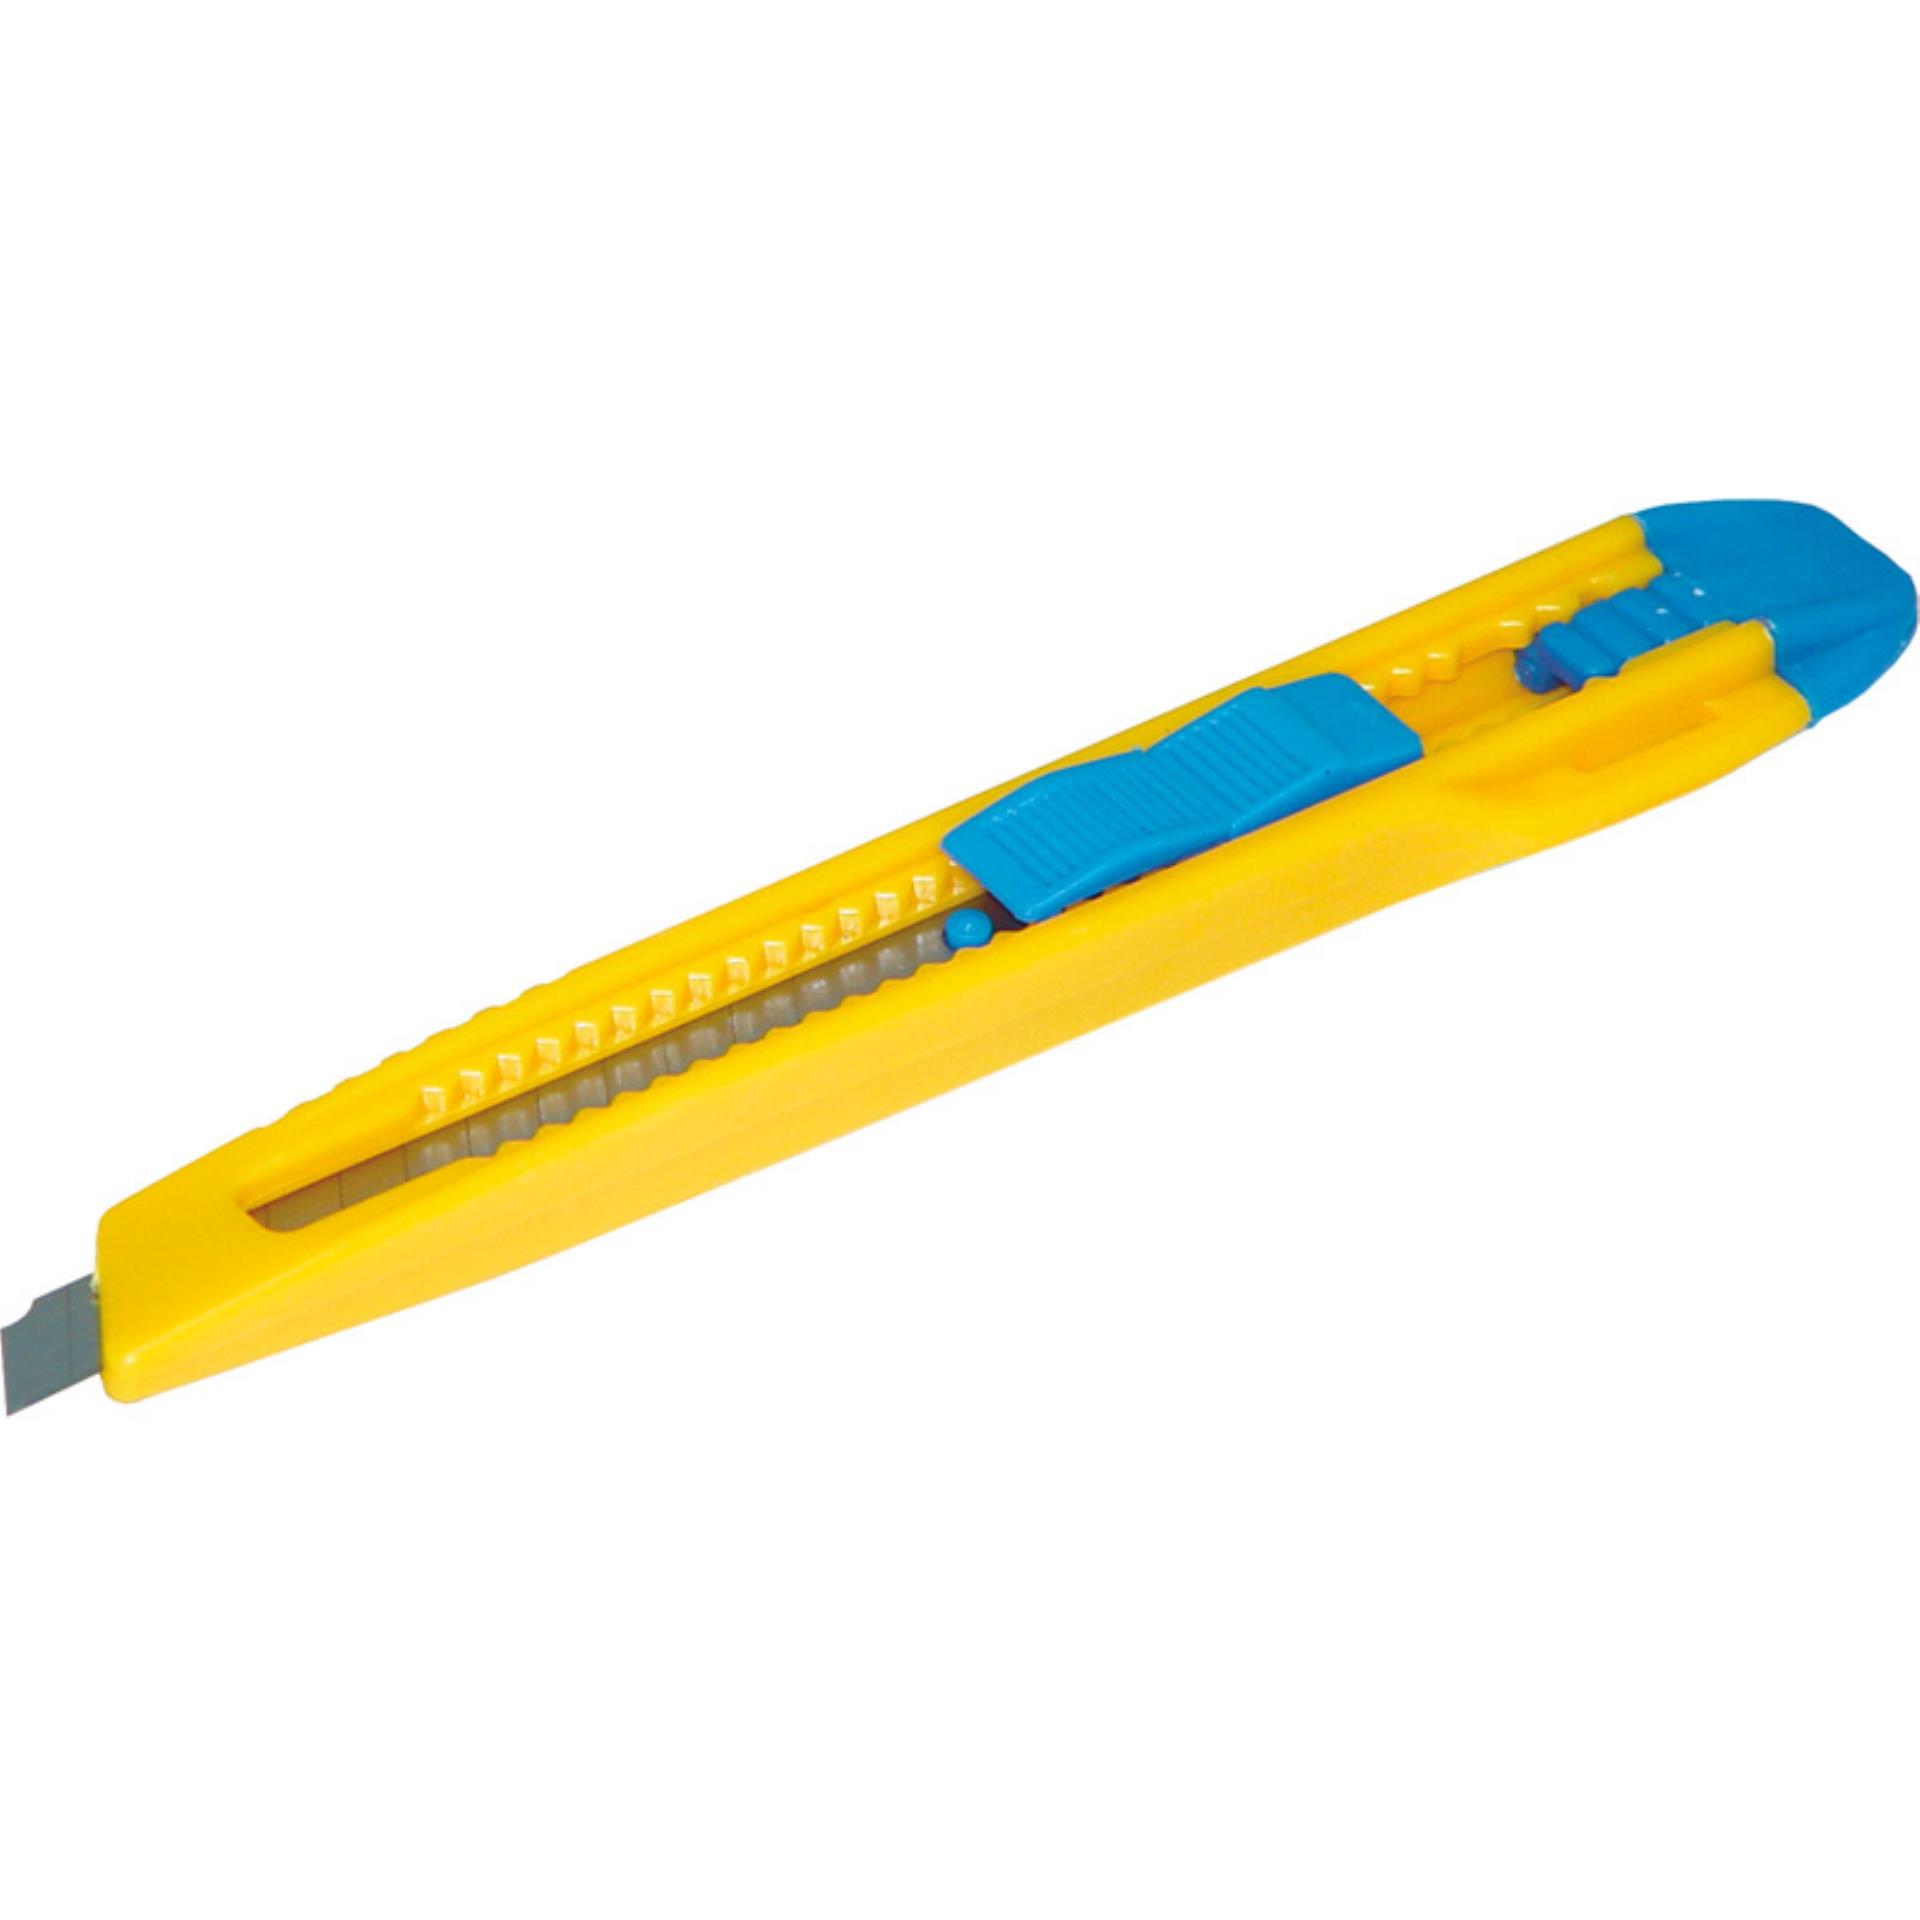 Odlamovací nůž Donau - 9 mm, modro-žlutý